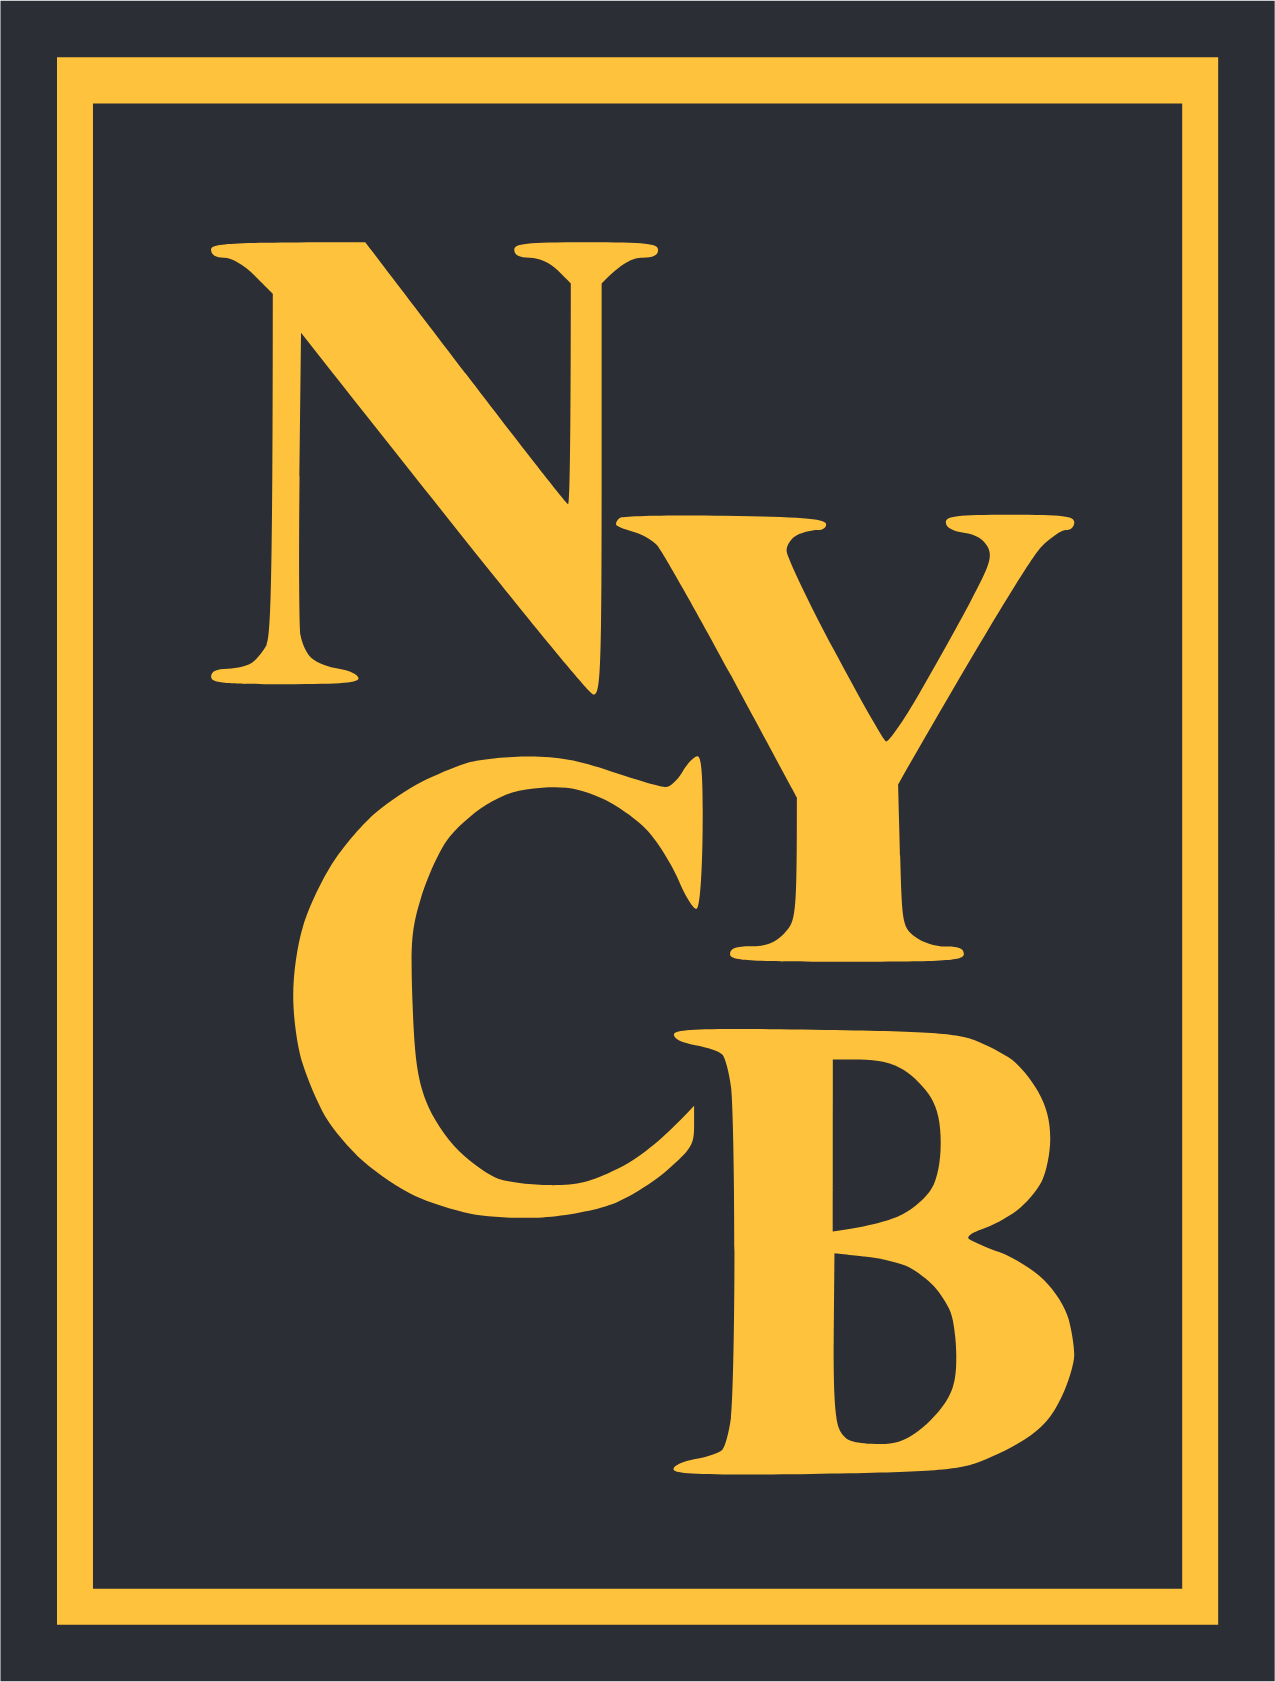 New York Community Bank logo in transparent PNG format